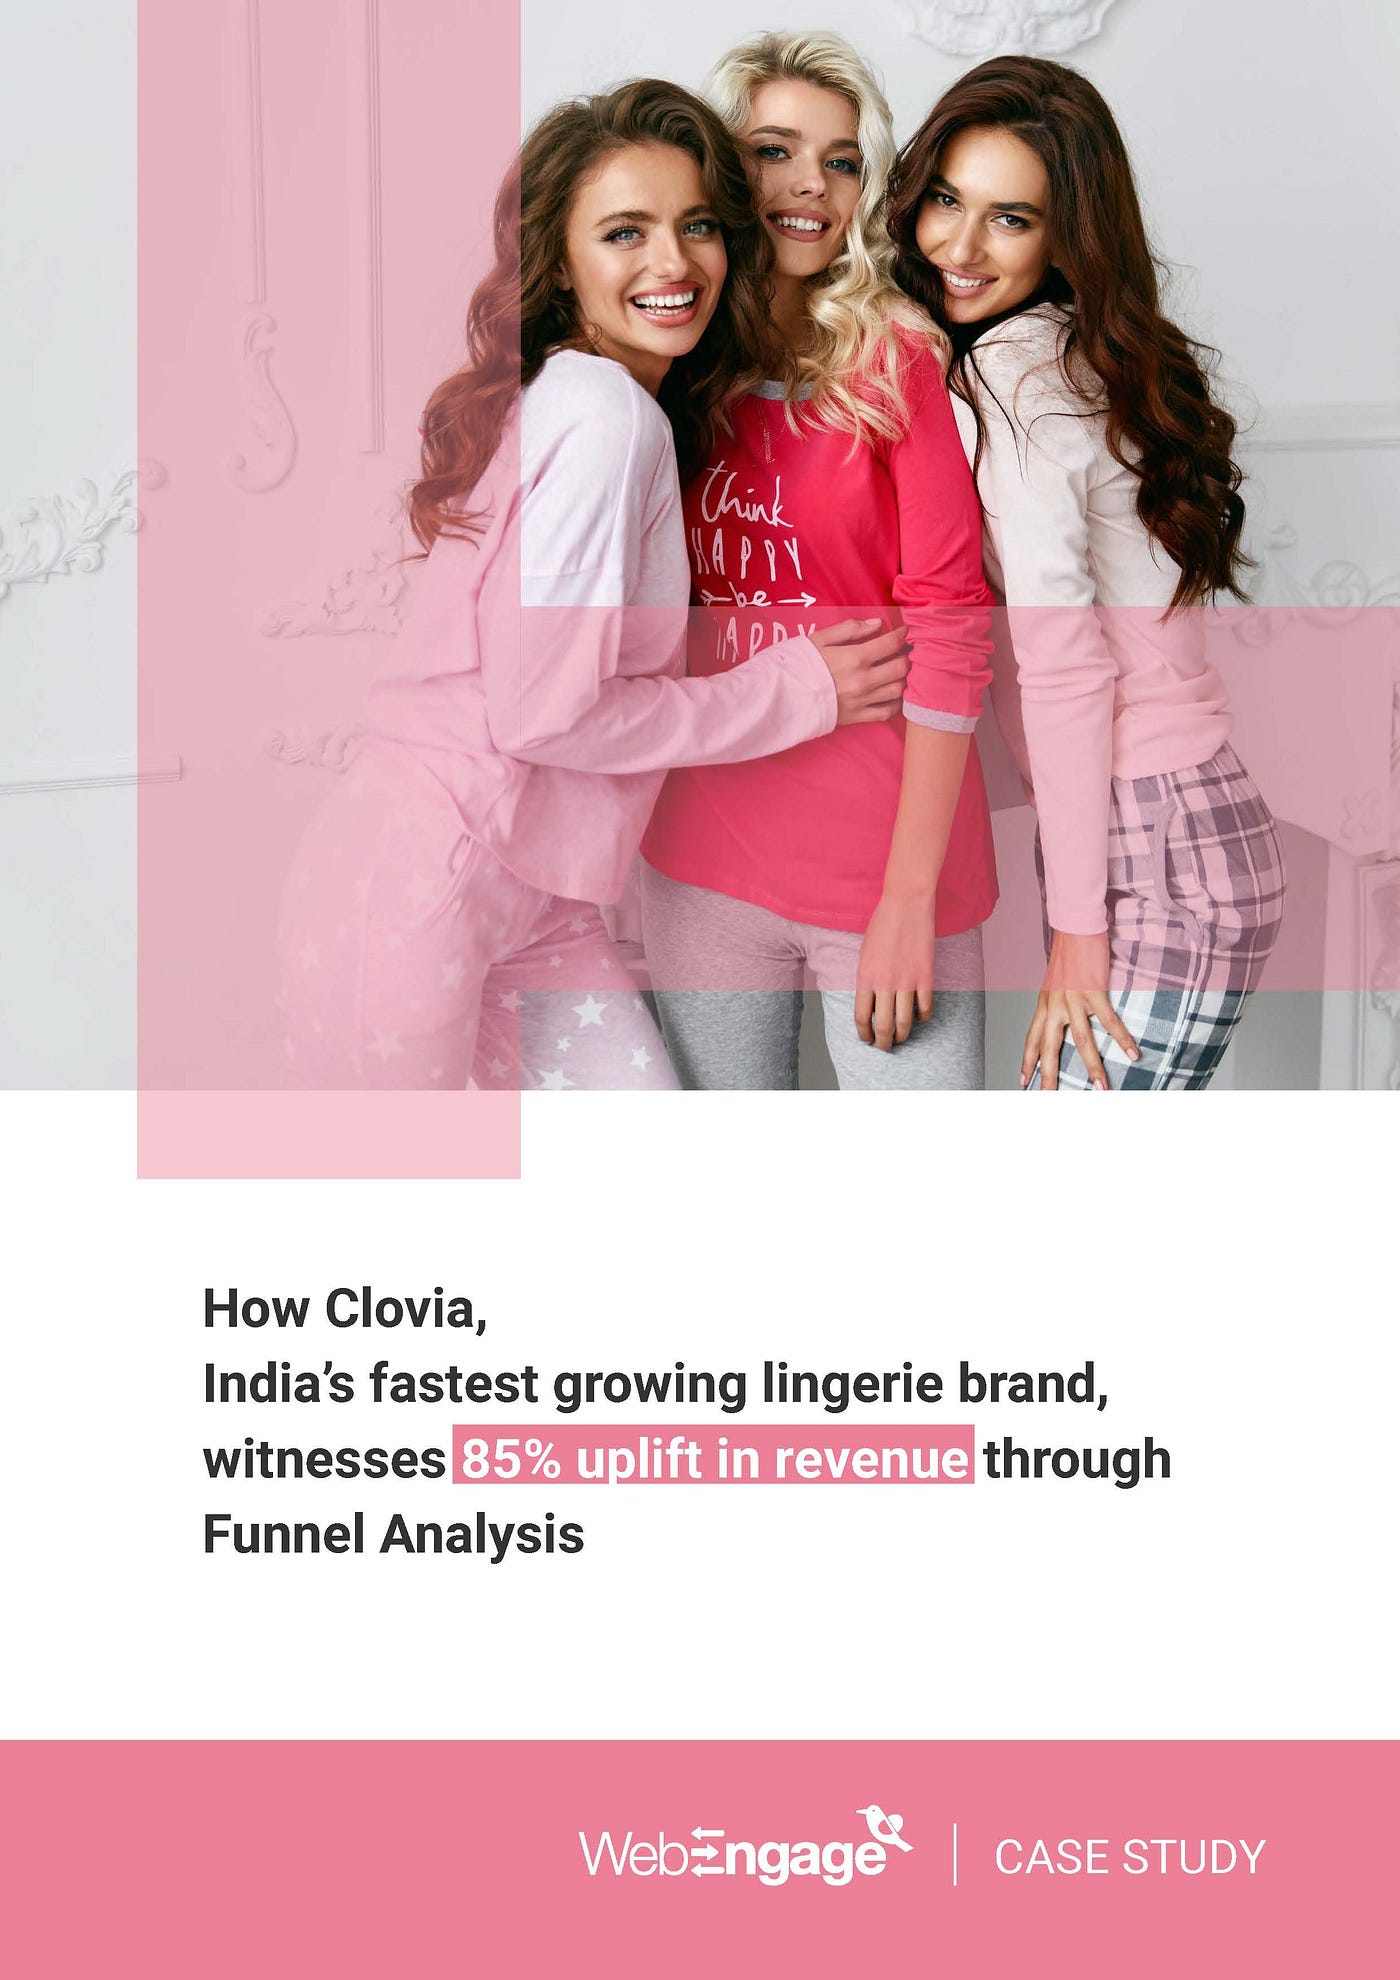 Case Study] India's Fastest Growing Lingerie Brand, Clovia